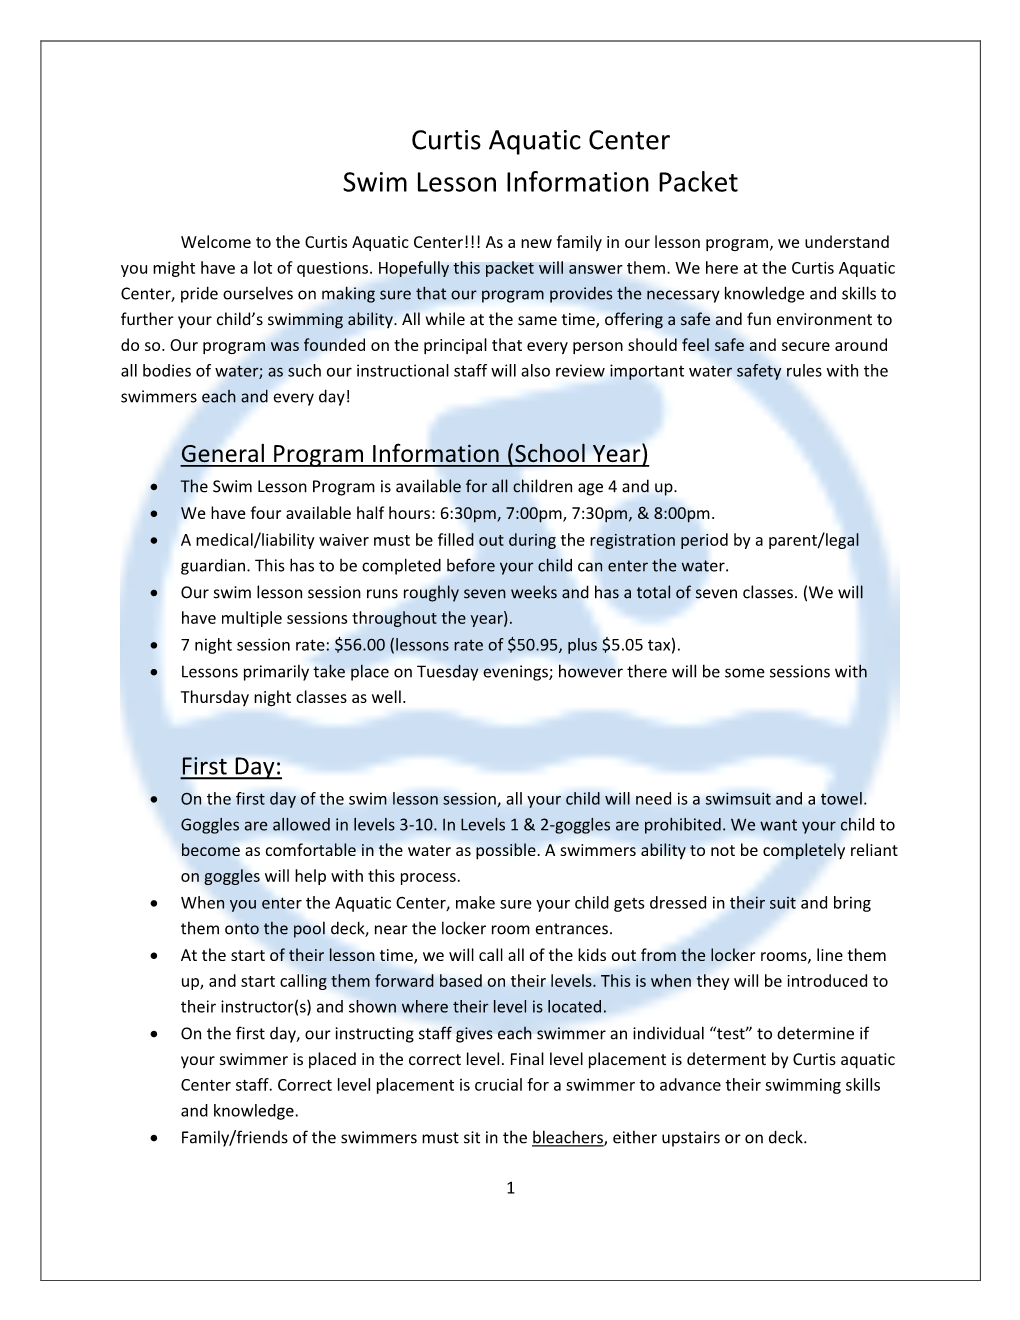 Curtis Aquatic Center Swim Lesson Information Packet